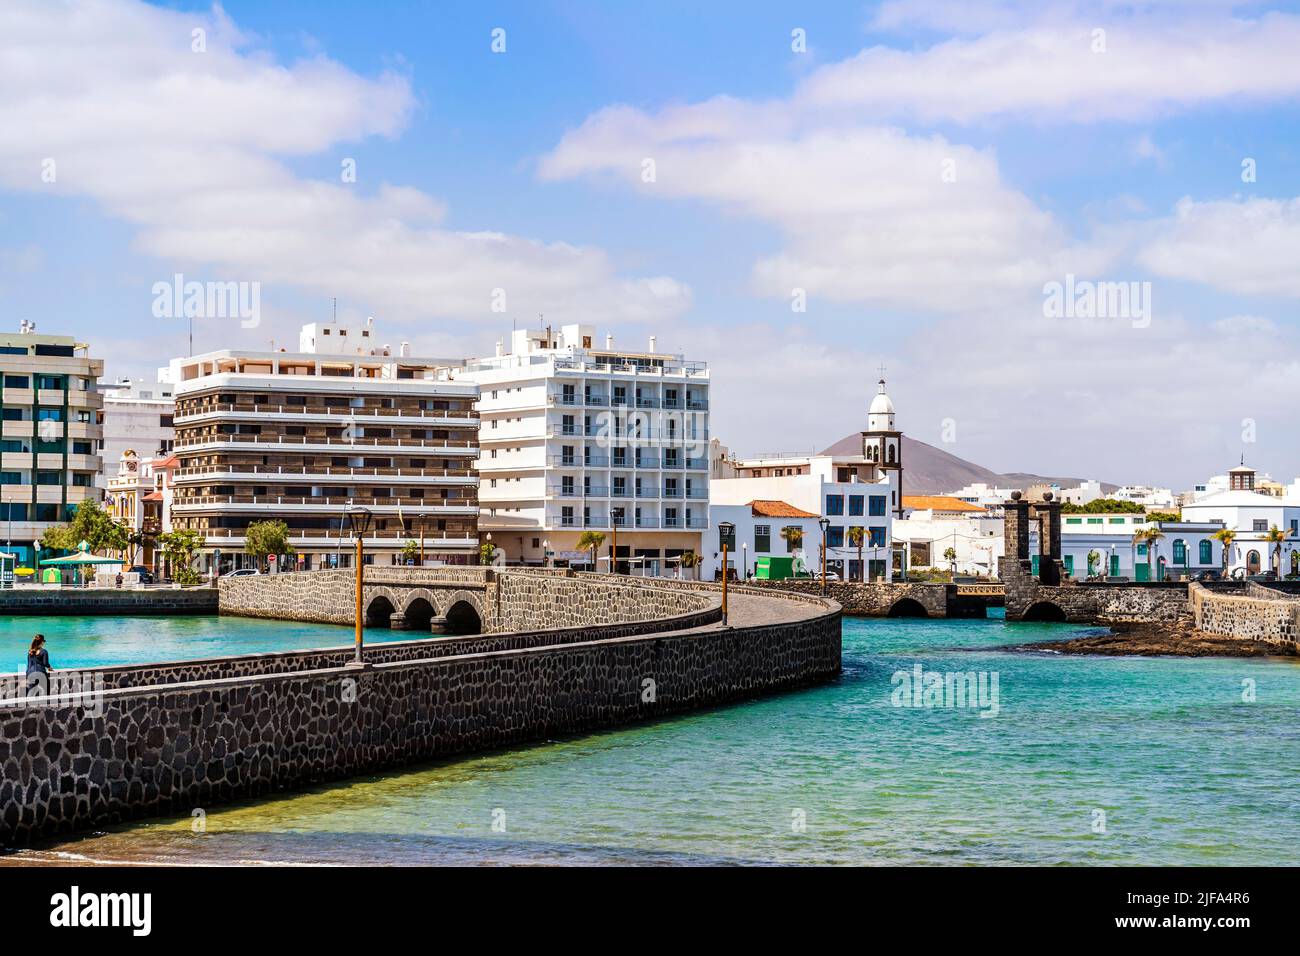 Arrecife cityscape seen from San Gabriel castle, capital city of Lanzarote, Canary Islands, Spain Stock Photo